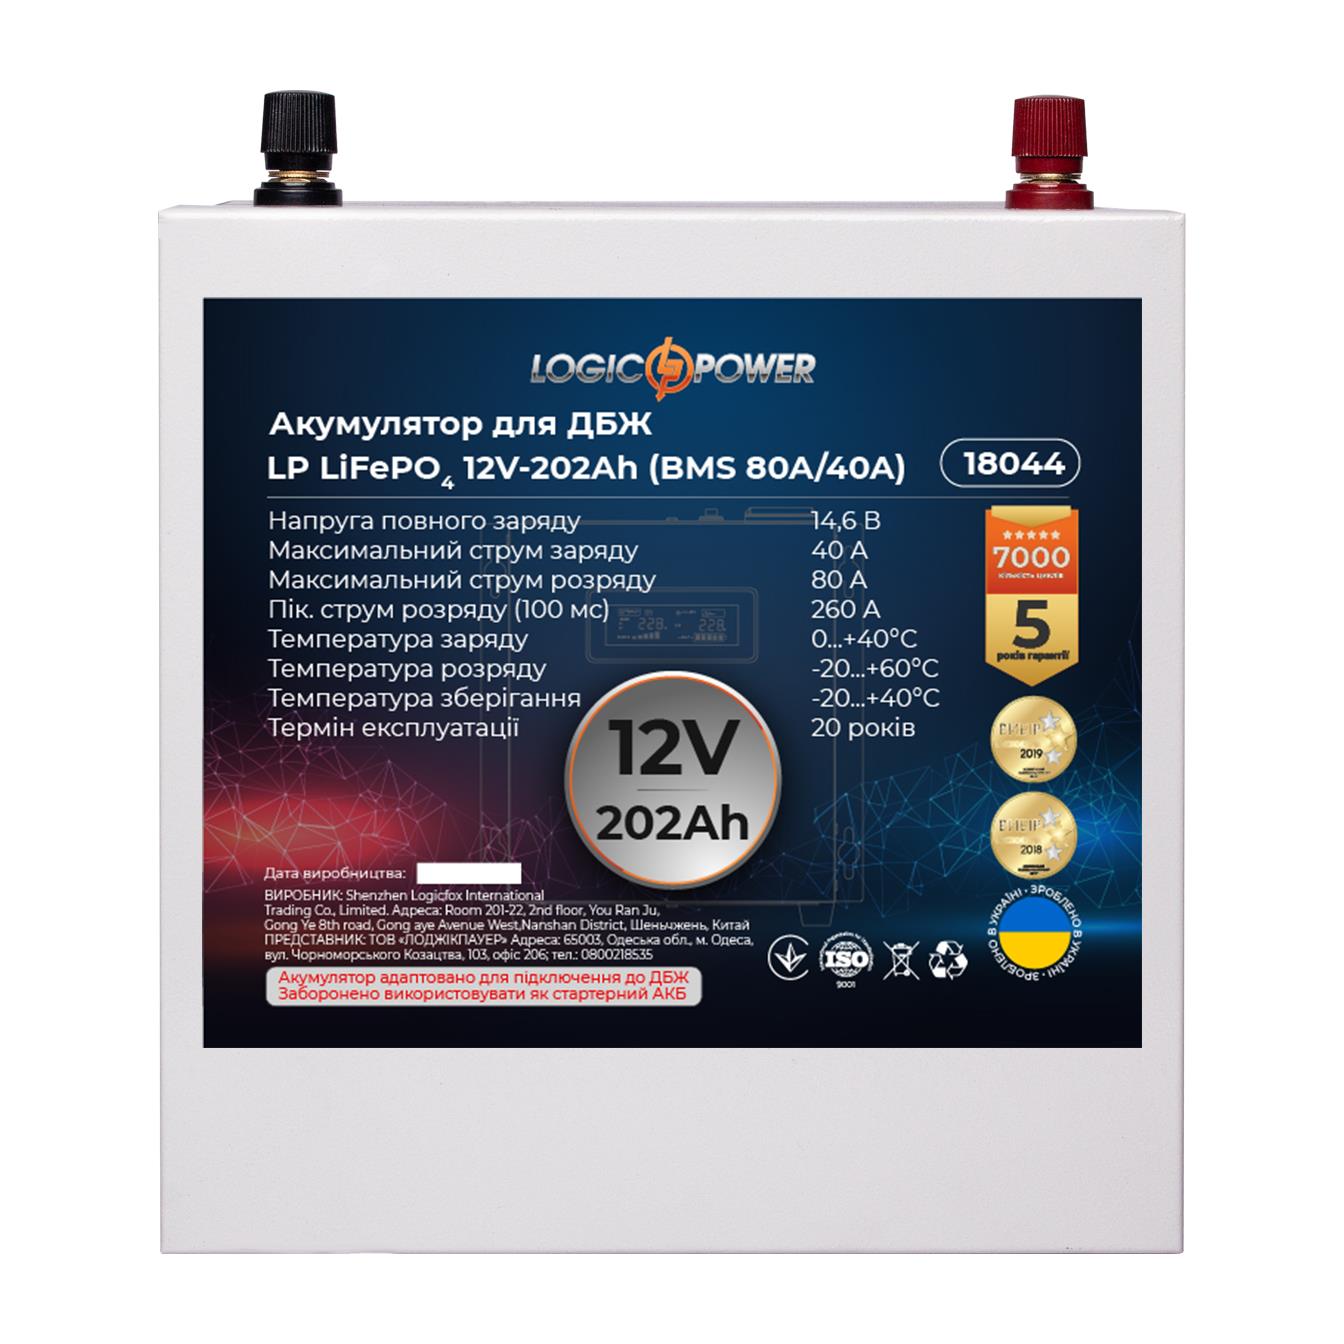 Акумулятор літій-залізо-фосфатний LogicPower LP LiFePO4 12V - 202 Ah (BMS 80A/40A) метал (18044)